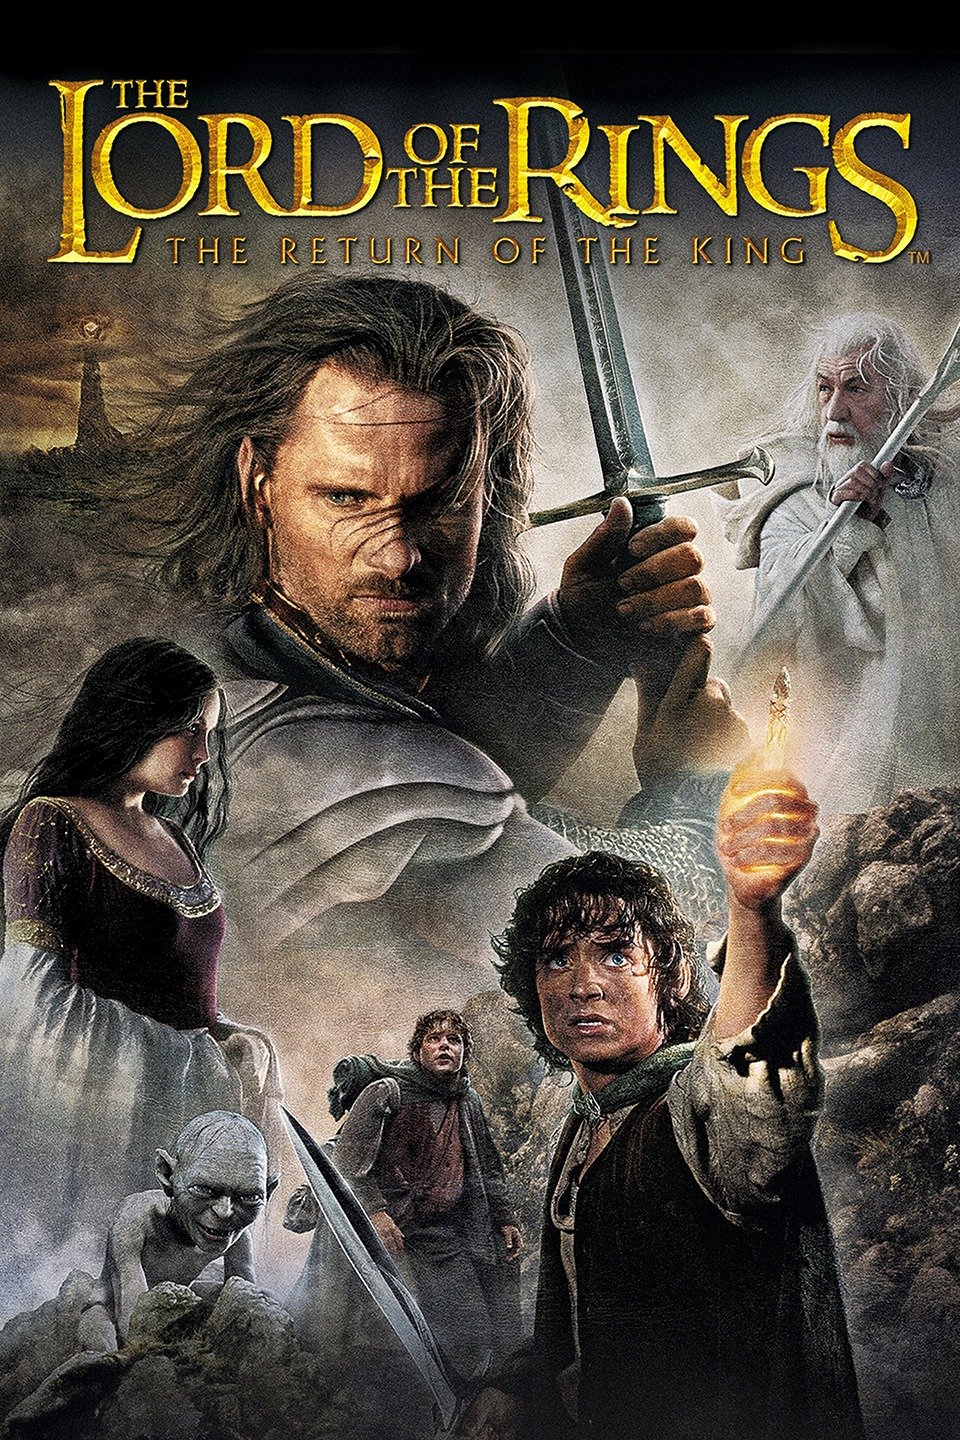 [MINI Super-HQ] The Lord of the Rings: The Return of the King (2003) มหาสงครามชิงพิภพ [1080p] [พากย์ไทย 5.1 + อังกฤษ DTS] [BluRay.DTS.x264] [บรรยายไทย + อังกฤษ] [เสียงไทย + ซับไทย] [ONE2UP]